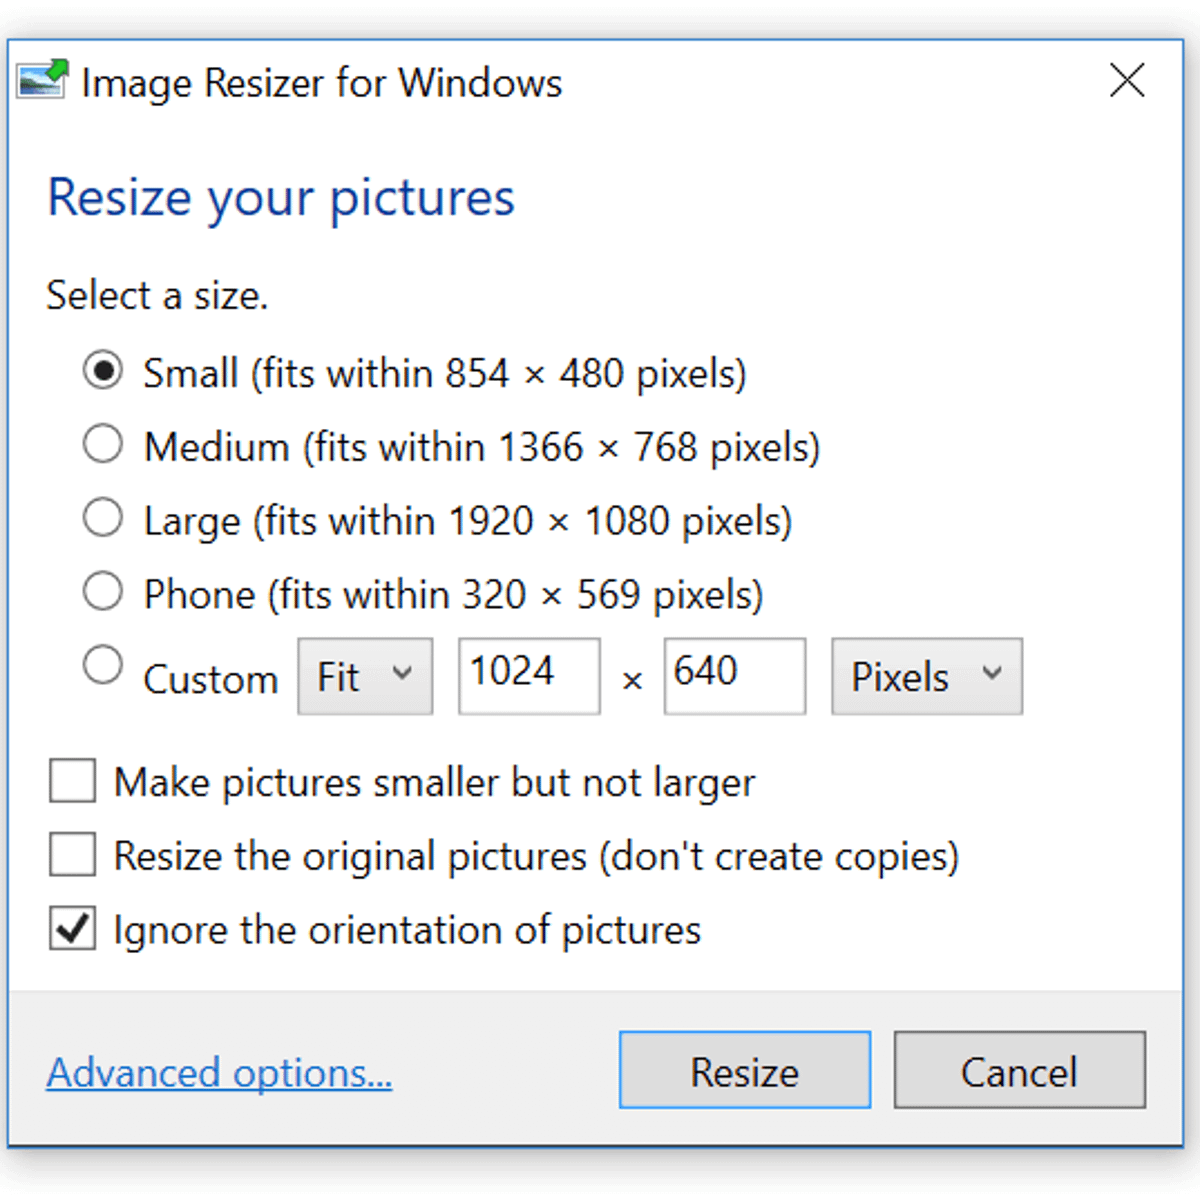 image-resizer-for-windows-alternatives-and-similar-software